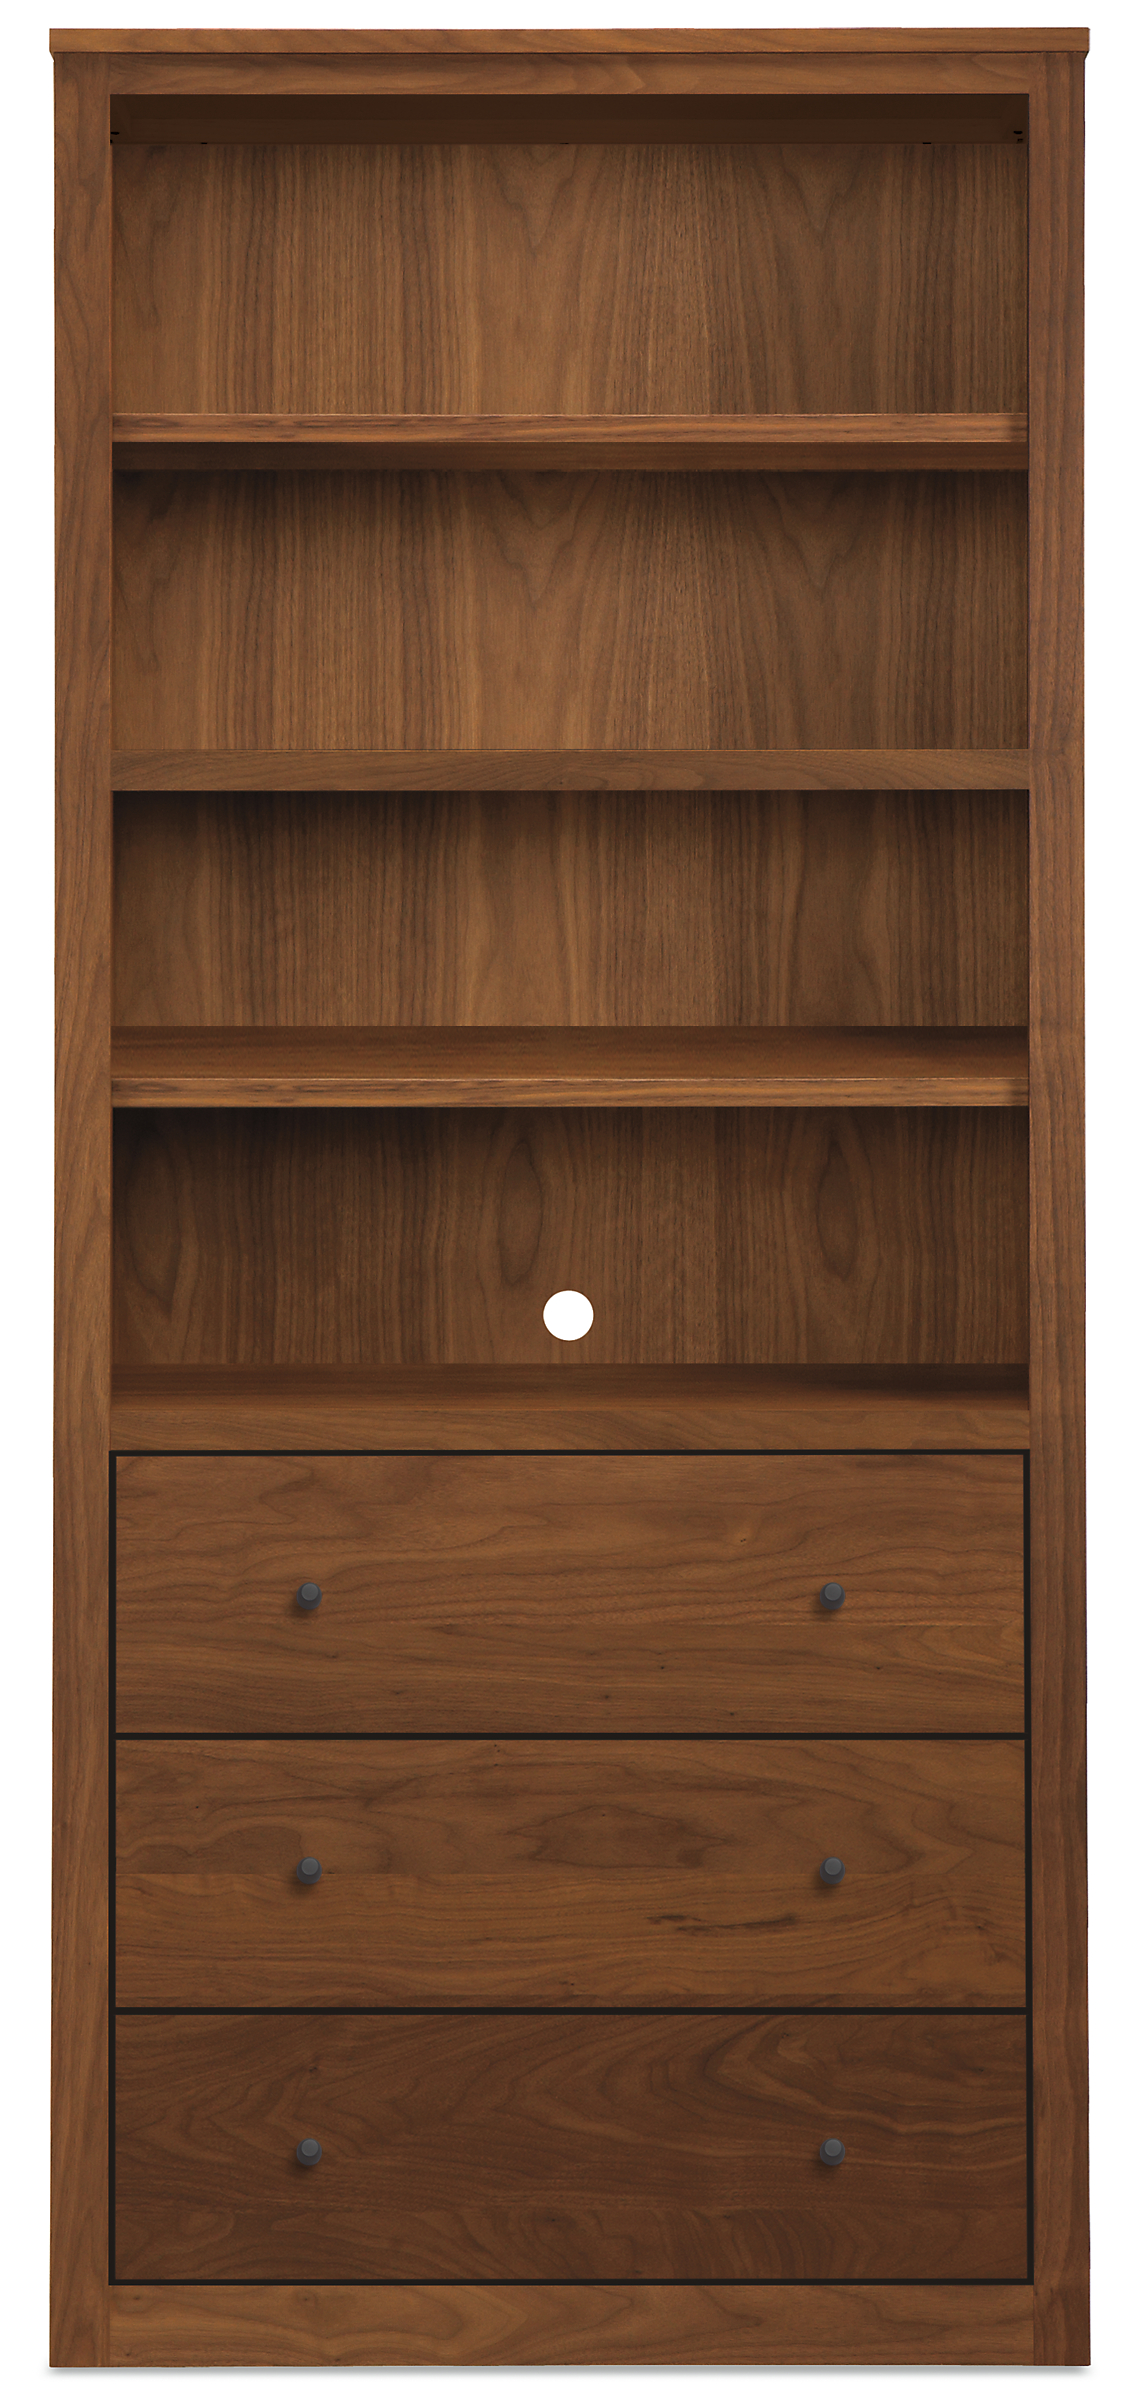 Woodwind 32w 17d 72h Three-Drawer Bookcase